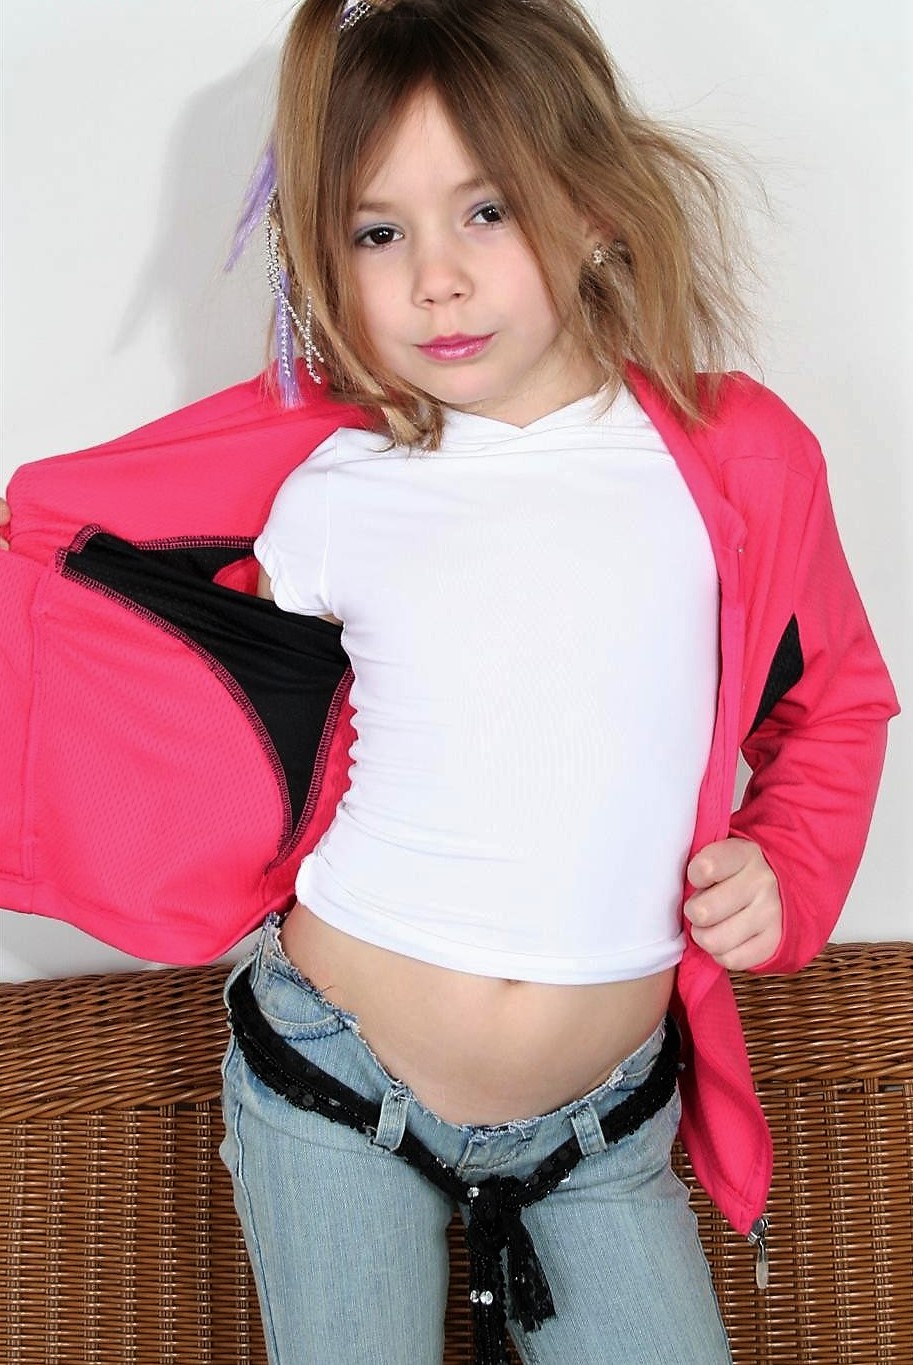 Miss Alli Rocker Babe Jeans 11 Imgsrc Ru